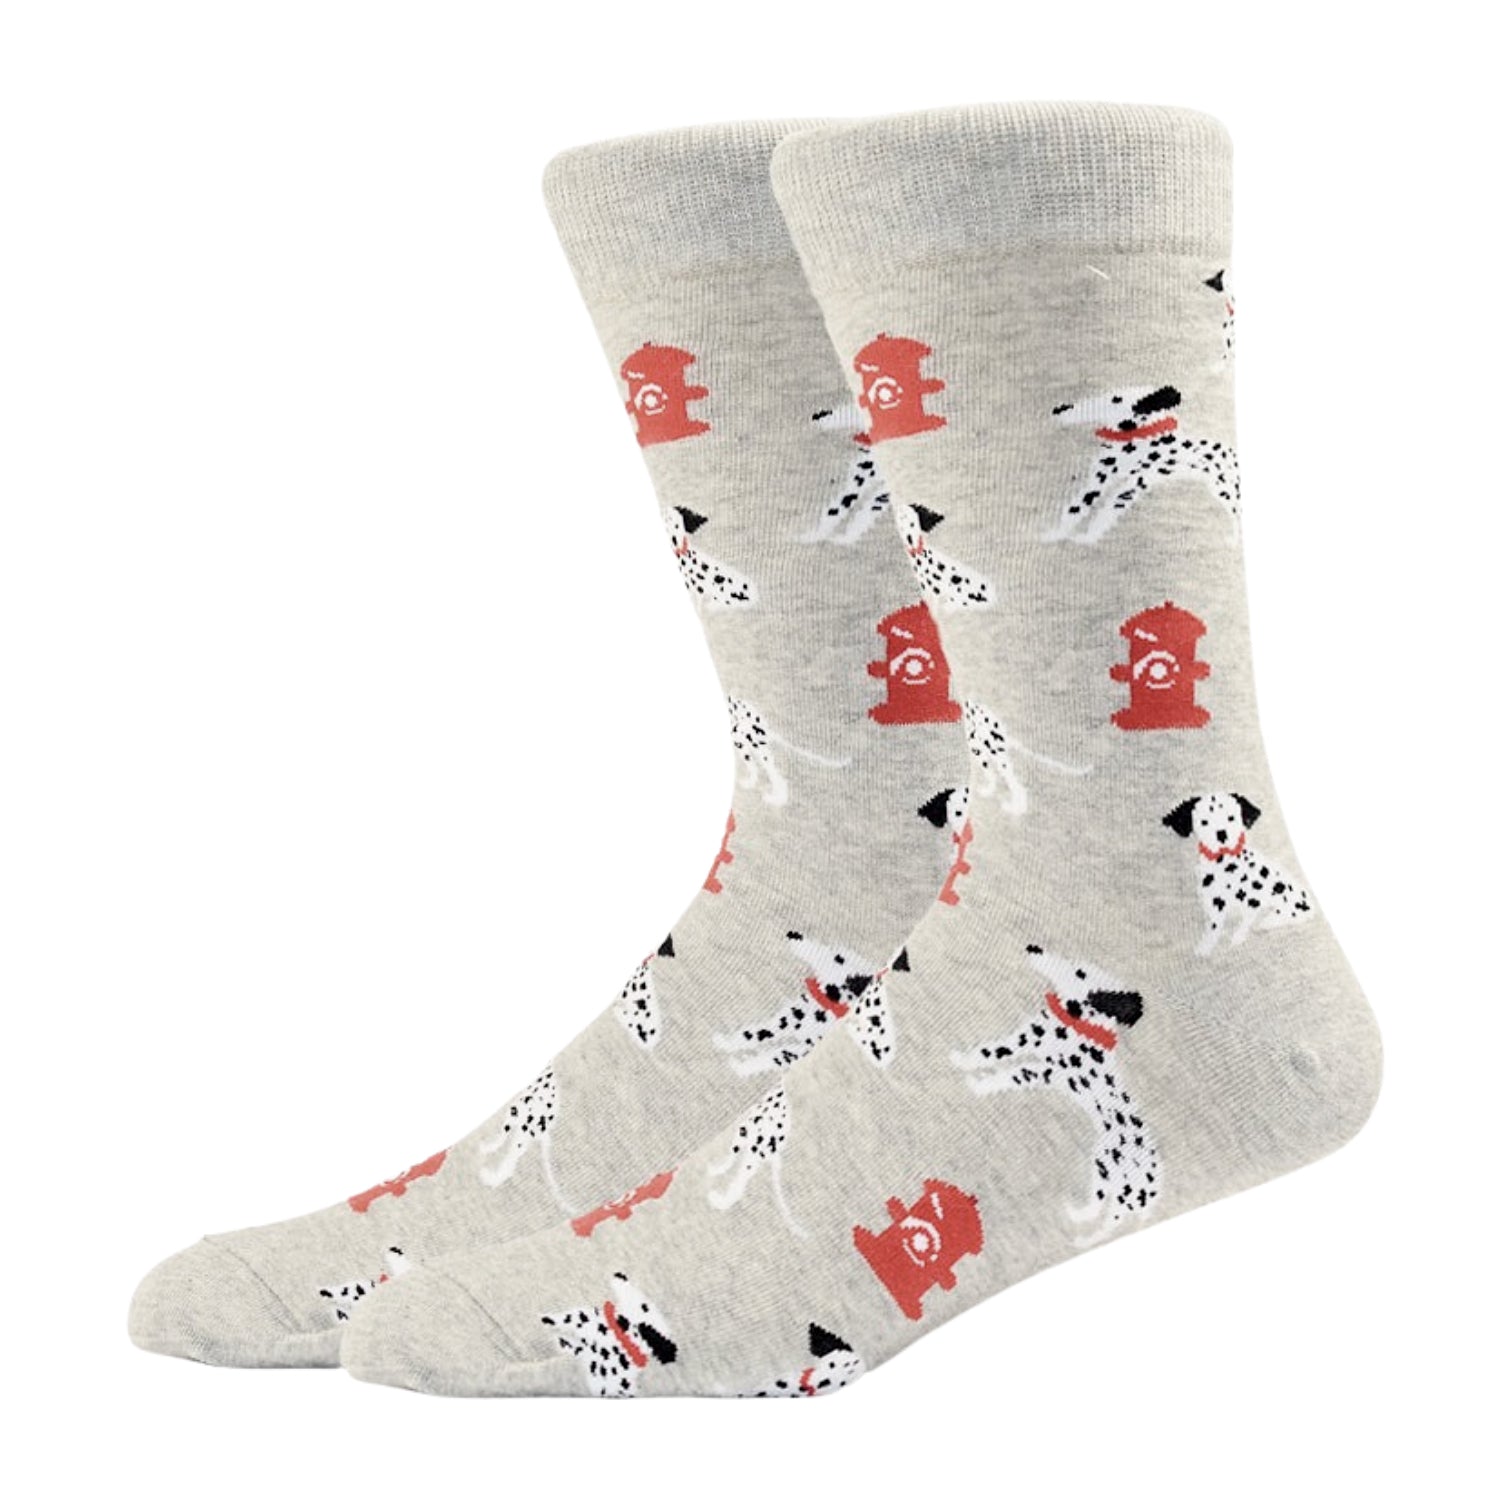 Mens Printed Quarter Length Socks - 101 Dalmatians - IDENTITY Apparel Shop